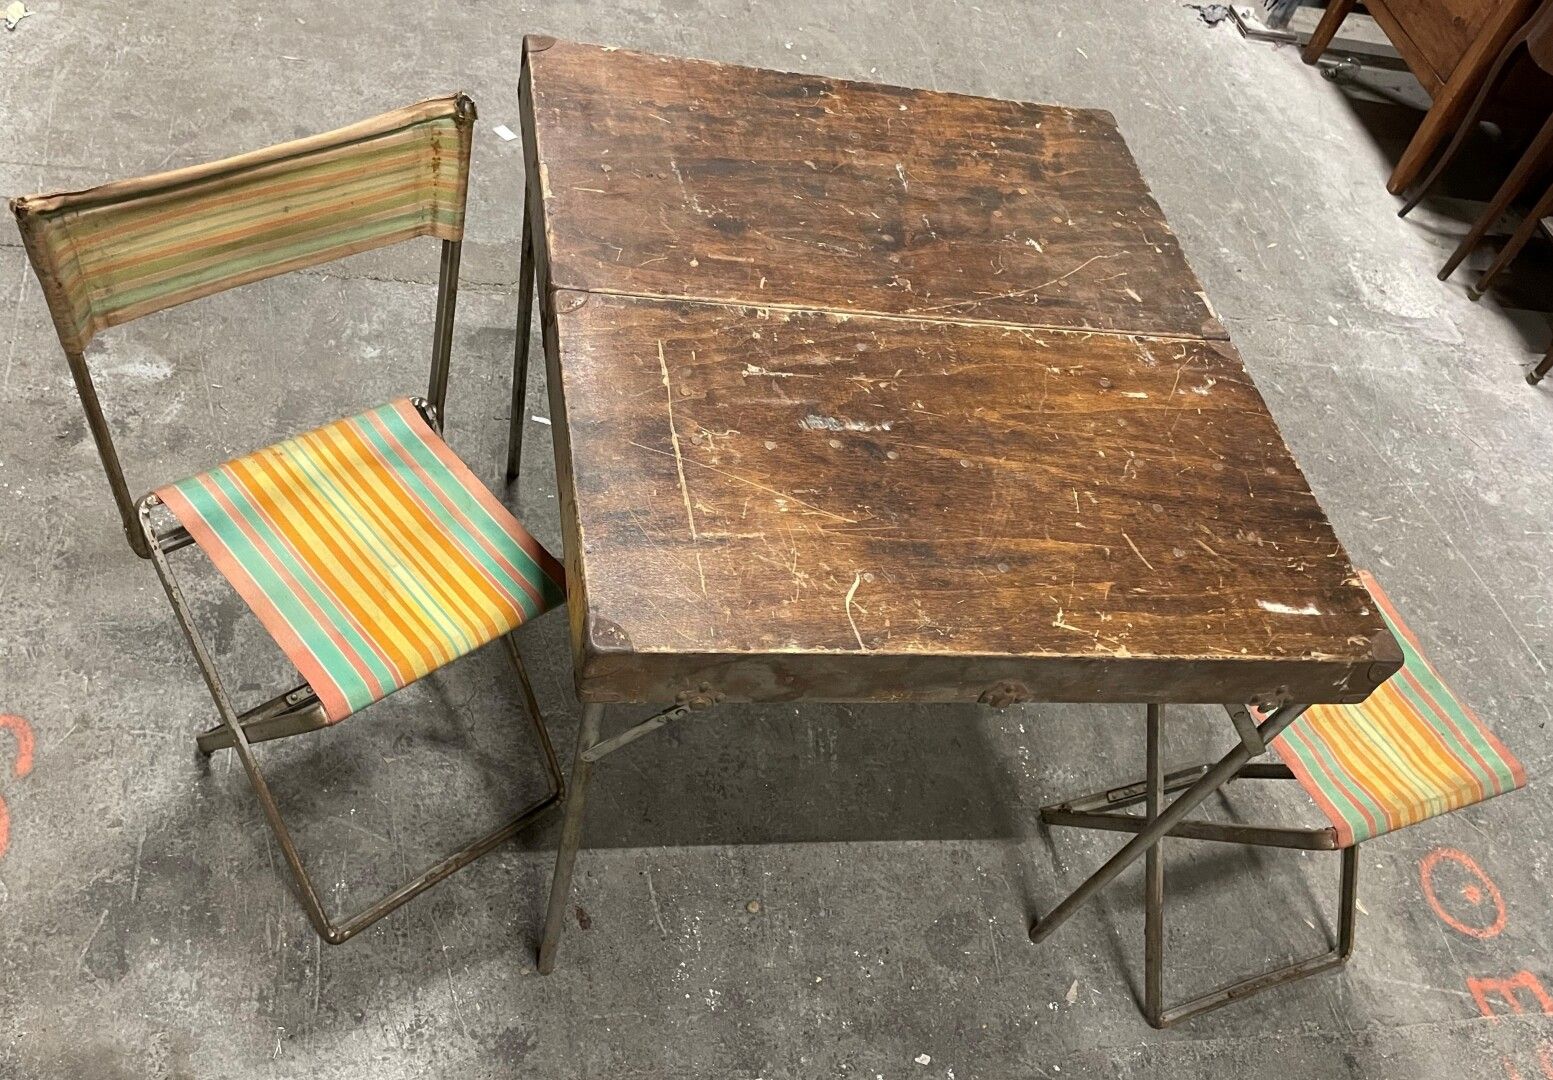 Null 木制野餐箱，有一张桌子，一把椅子和一个金属和织物制成的凳子。

封闭式行李箱：42 x 14 x 72厘米